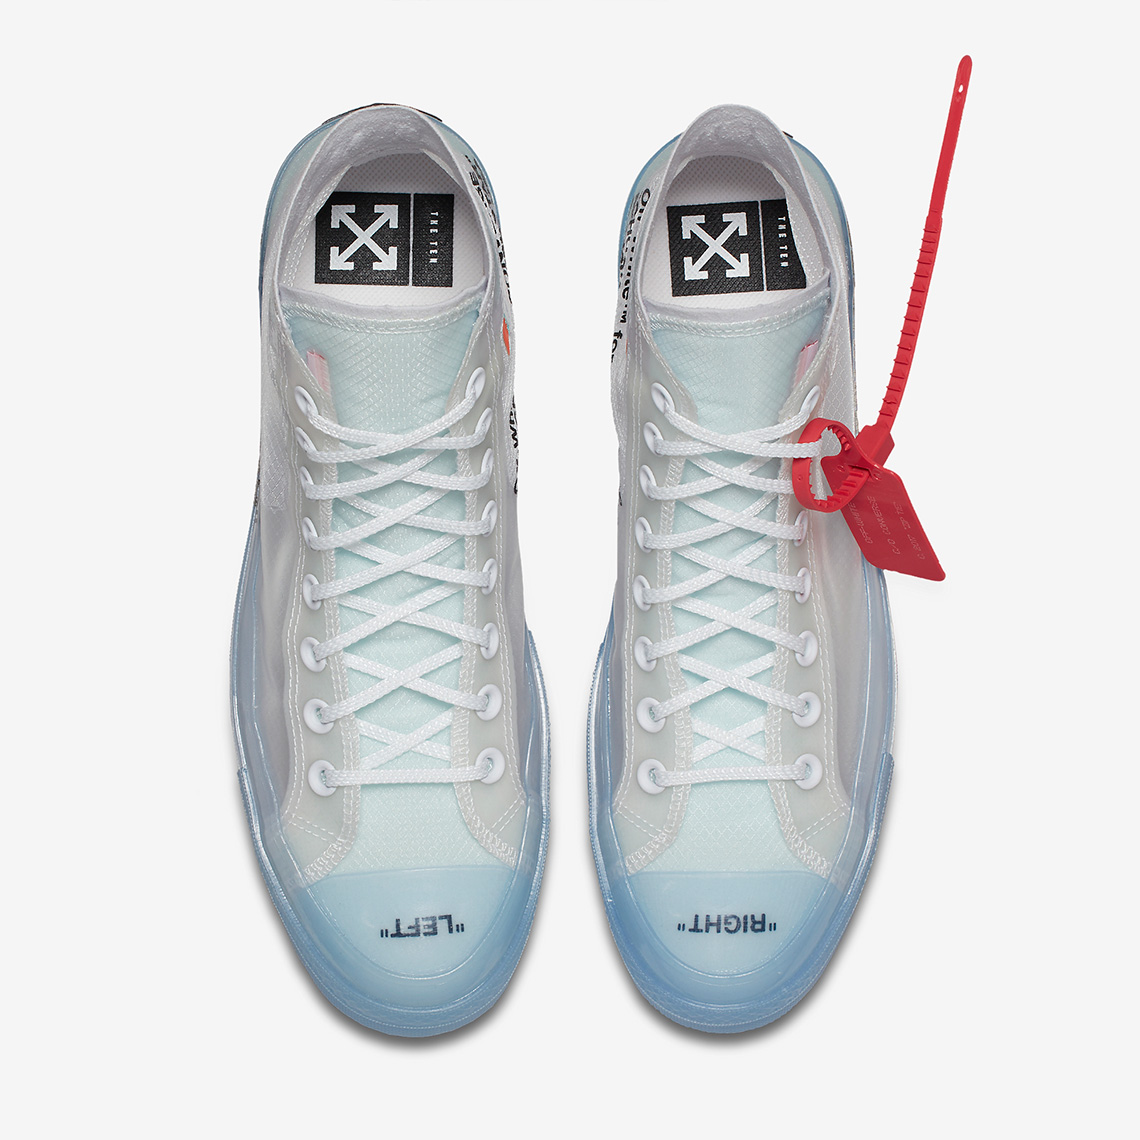 STORE LIST: OFF WHITE x Converse Chuck 70 | SneakerNews.com